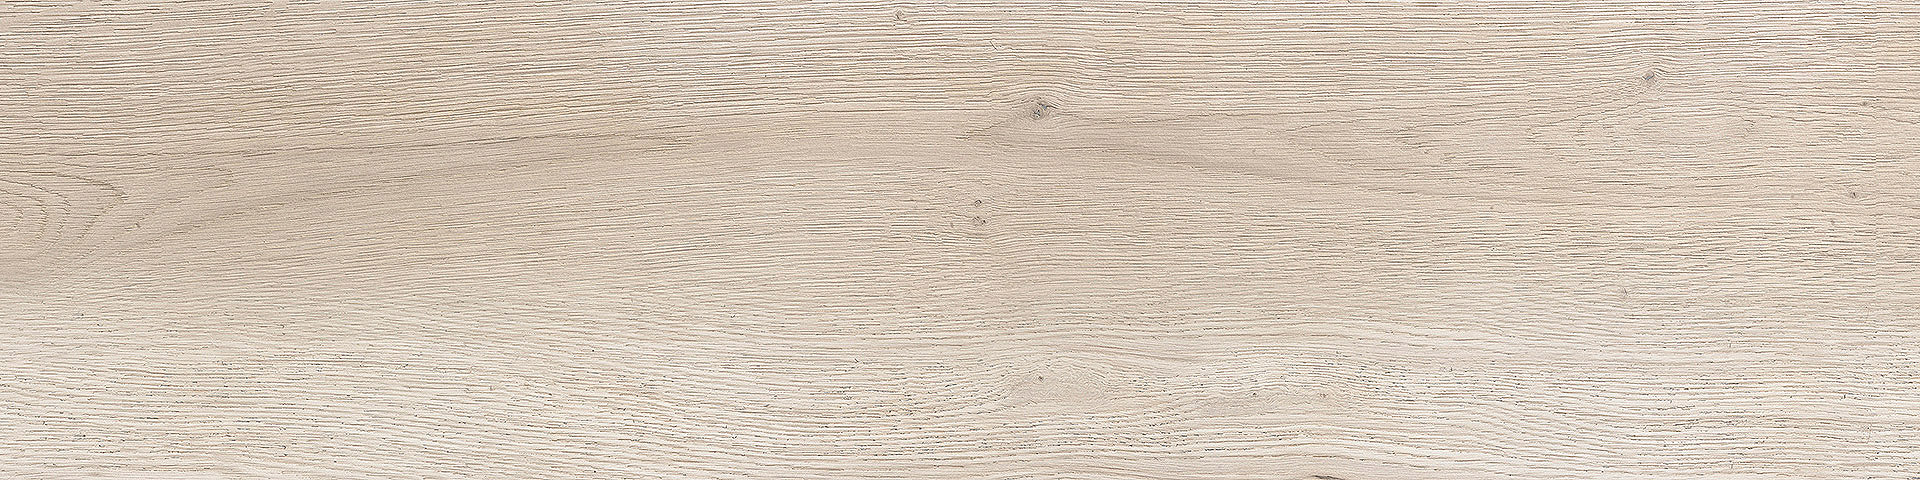 OAK ROVERE PURO Beige Wood tile   20 x 120 cm